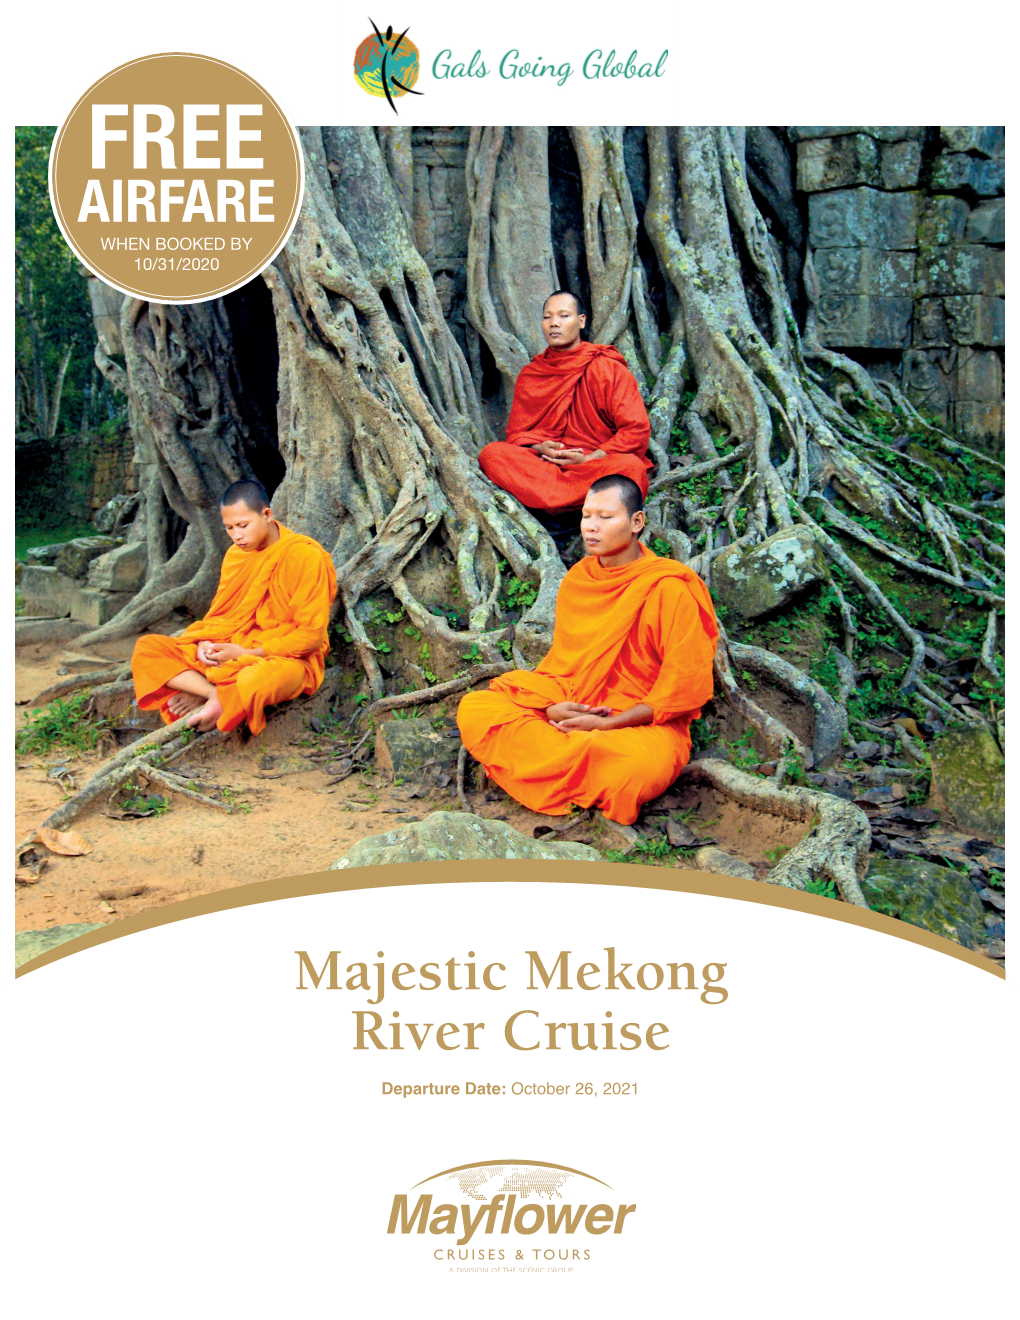 Majestic Mekong River Cruise